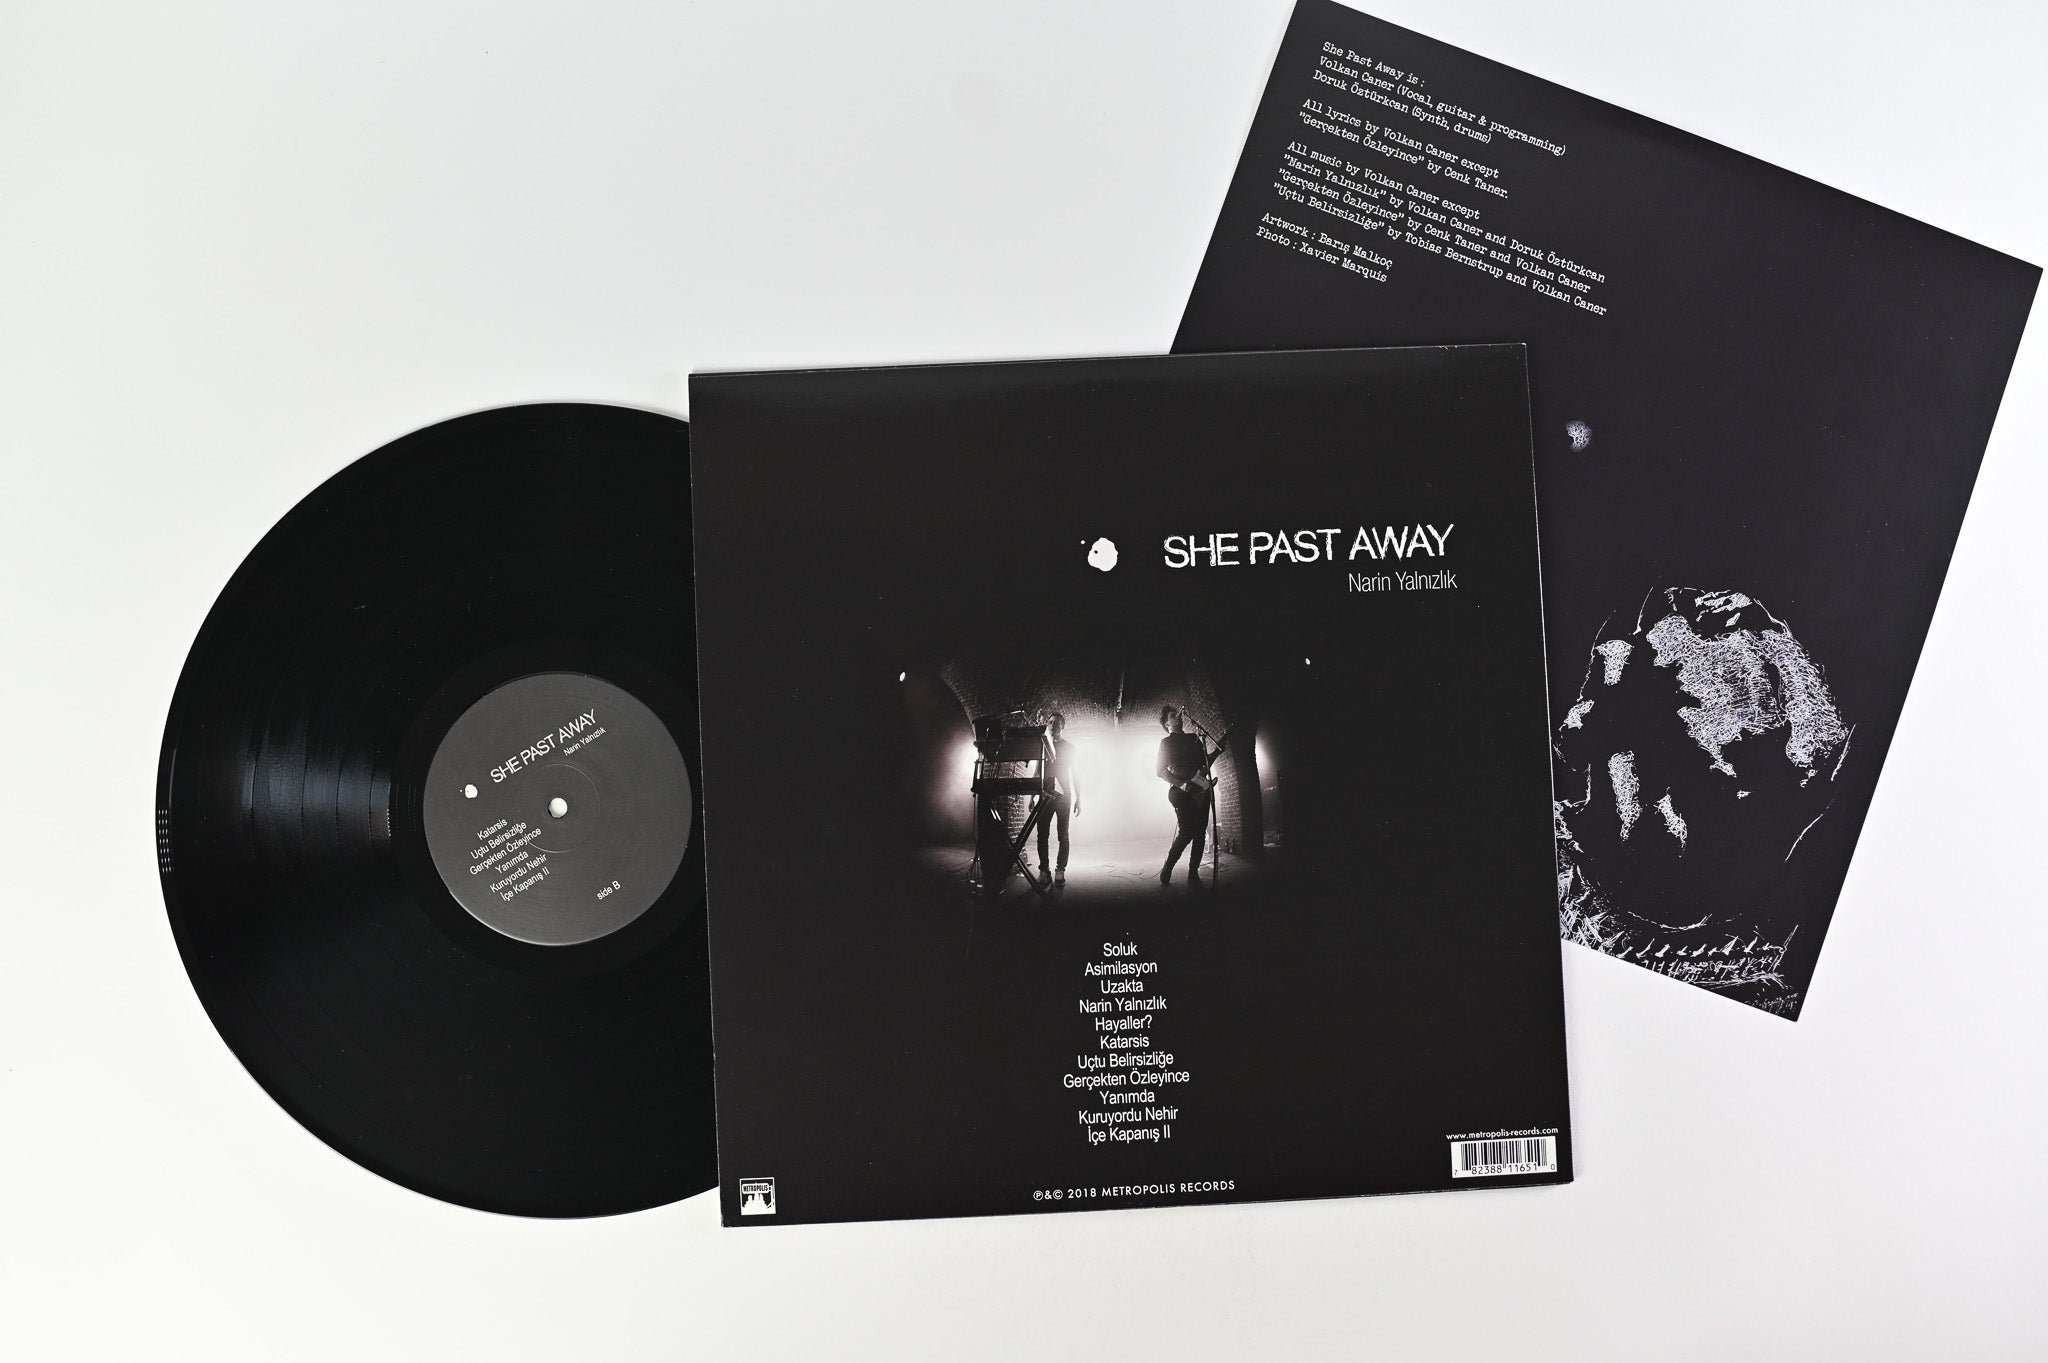 She Past Away - Narin Yalnızlık on Metropolis Ltd Reissue